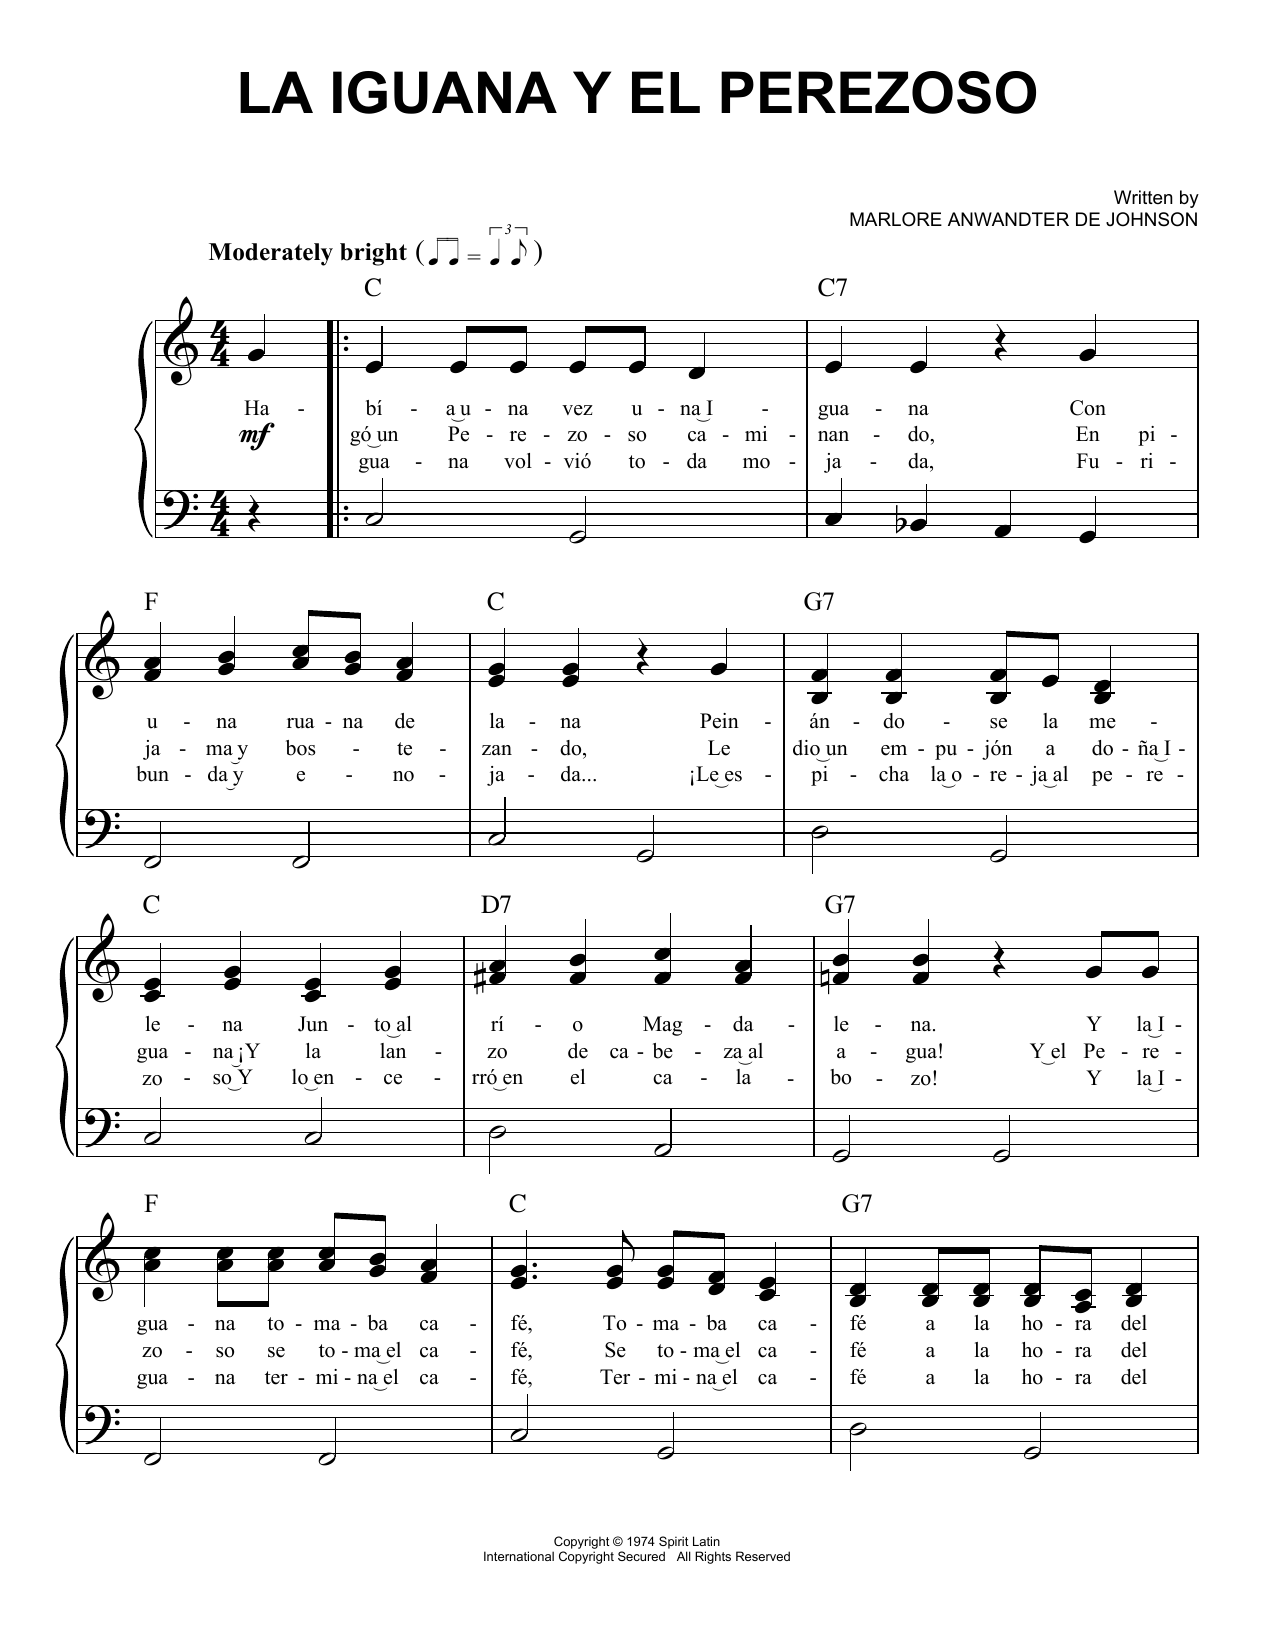 Marlore Anwandter de Johnson La Iguana Y El Perezoso Sheet Music Notes & Chords for Easy Piano - Download or Print PDF